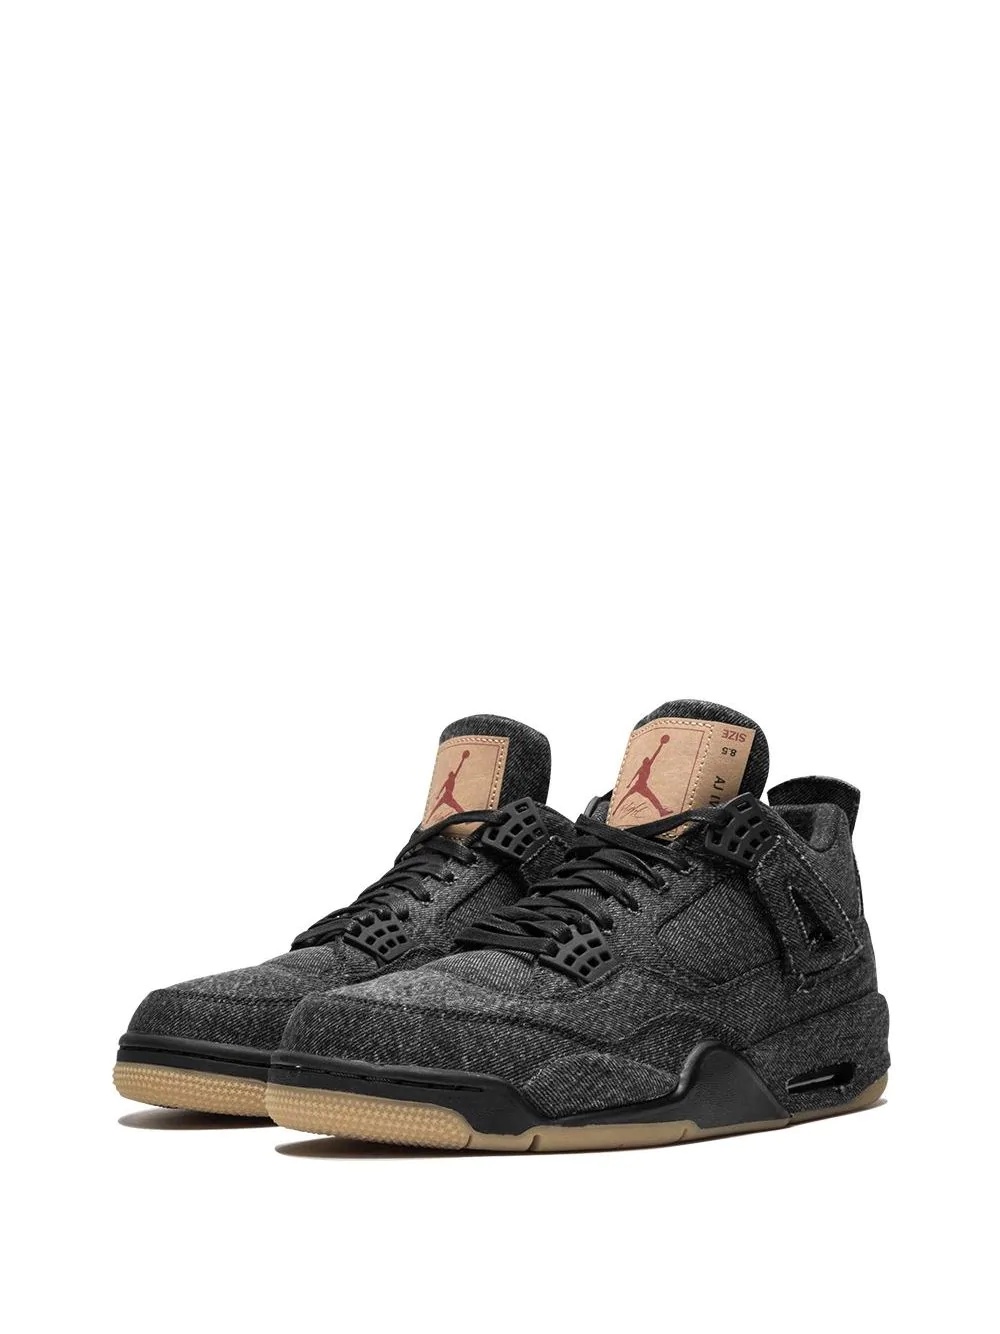 Jordan x Levi's Air Jordan 4 Retro NRG Black Levis sneakers | REVERSIBLE